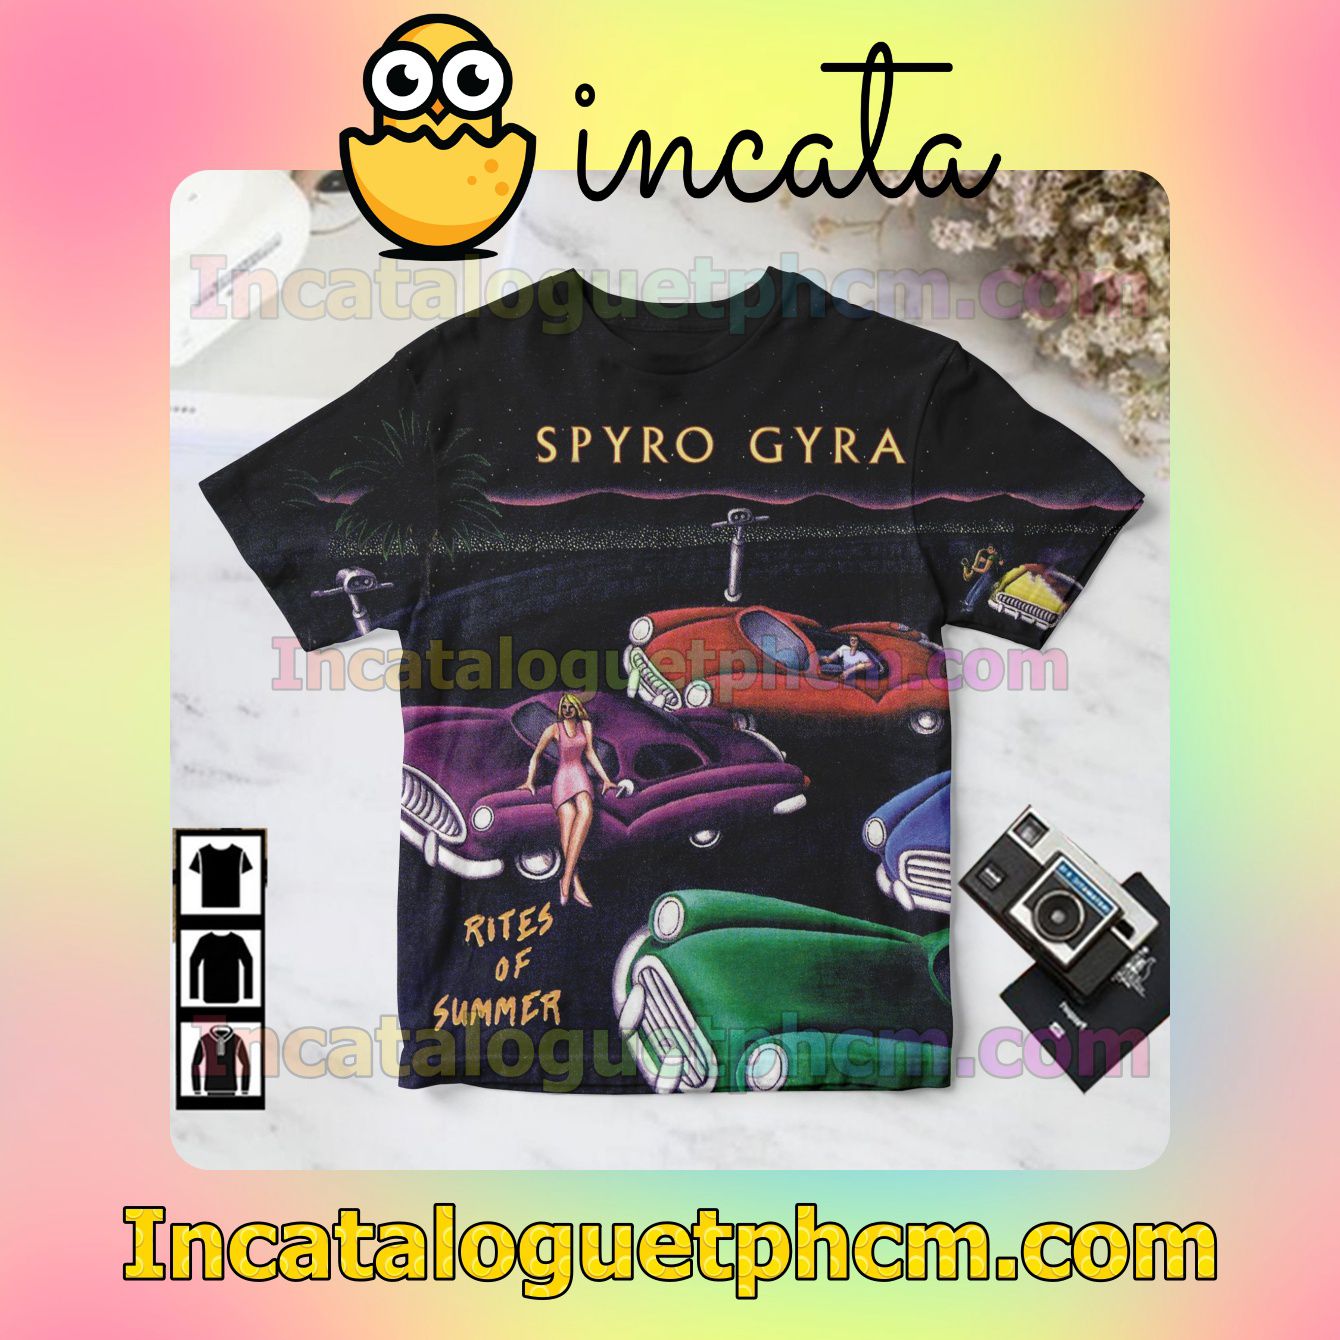 Spyro Gyra Rites Of Summer Album Cover Gift Shirt